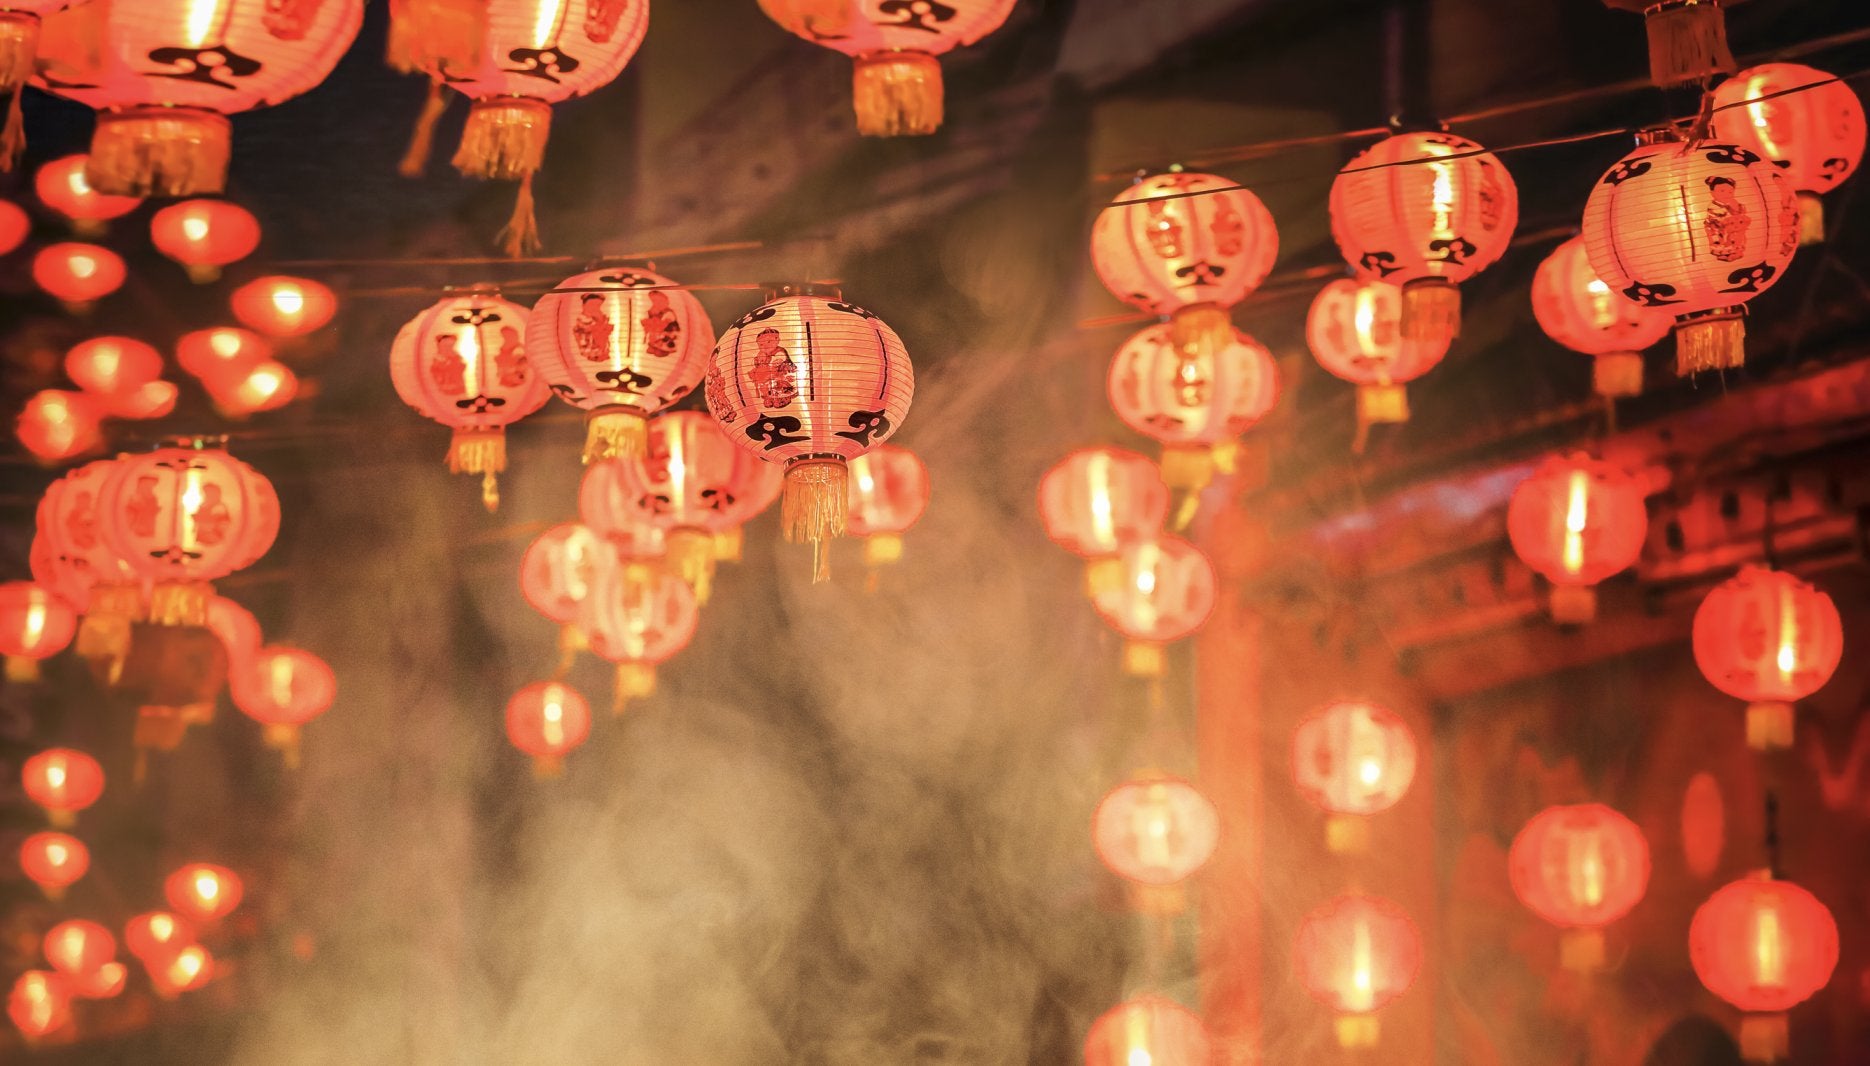 Lunar New Year lanterns in Singapore